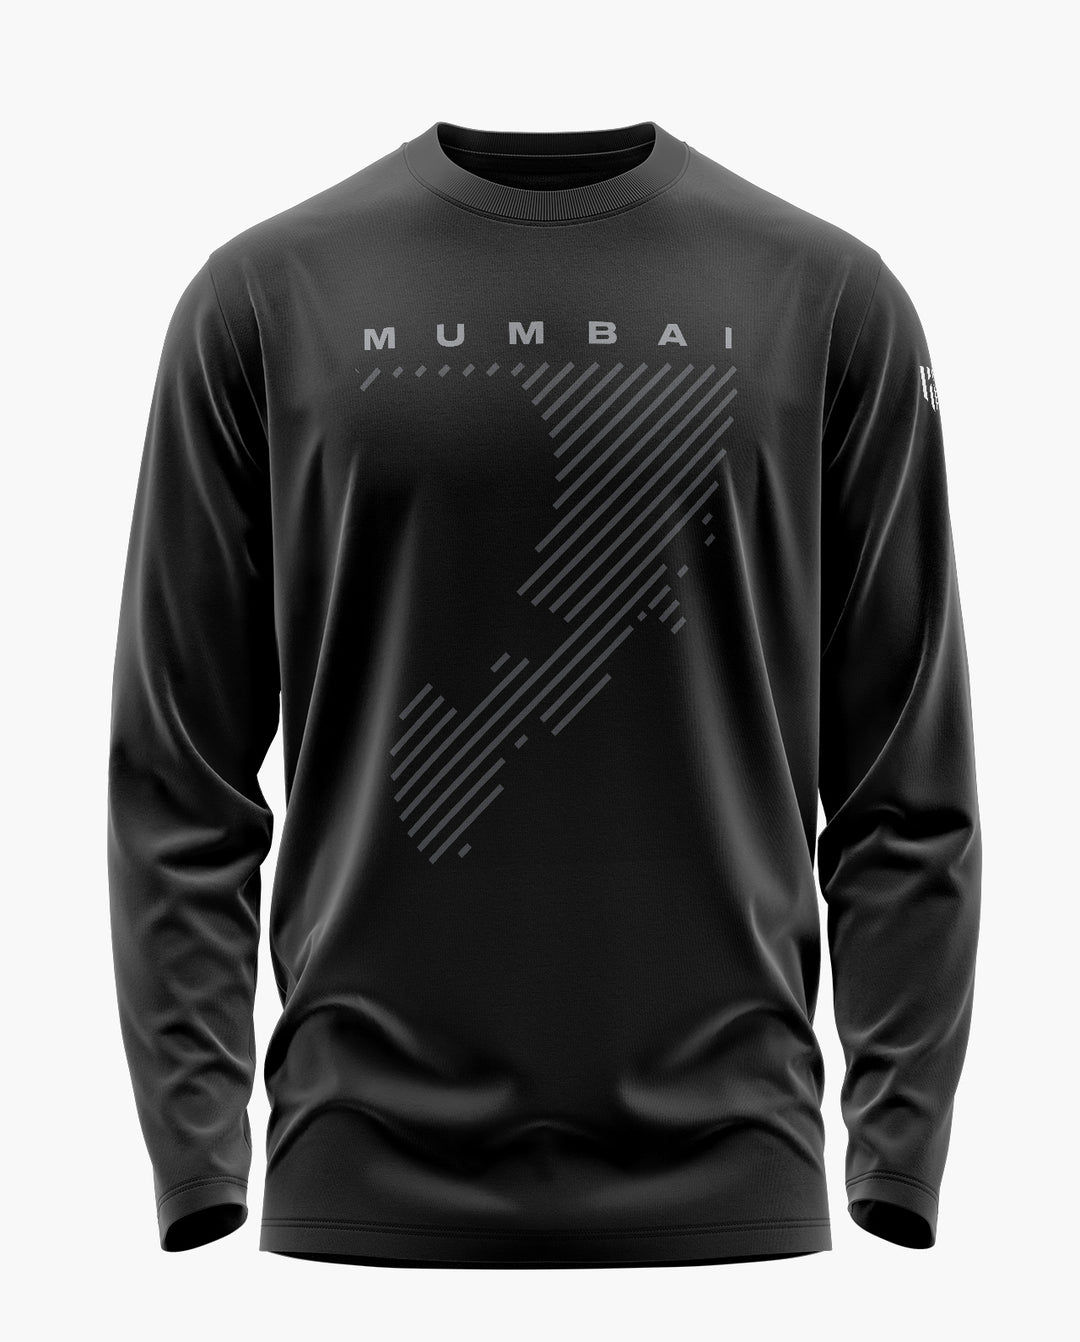 Mumbai City Zen Full Sleeve T-Shirt